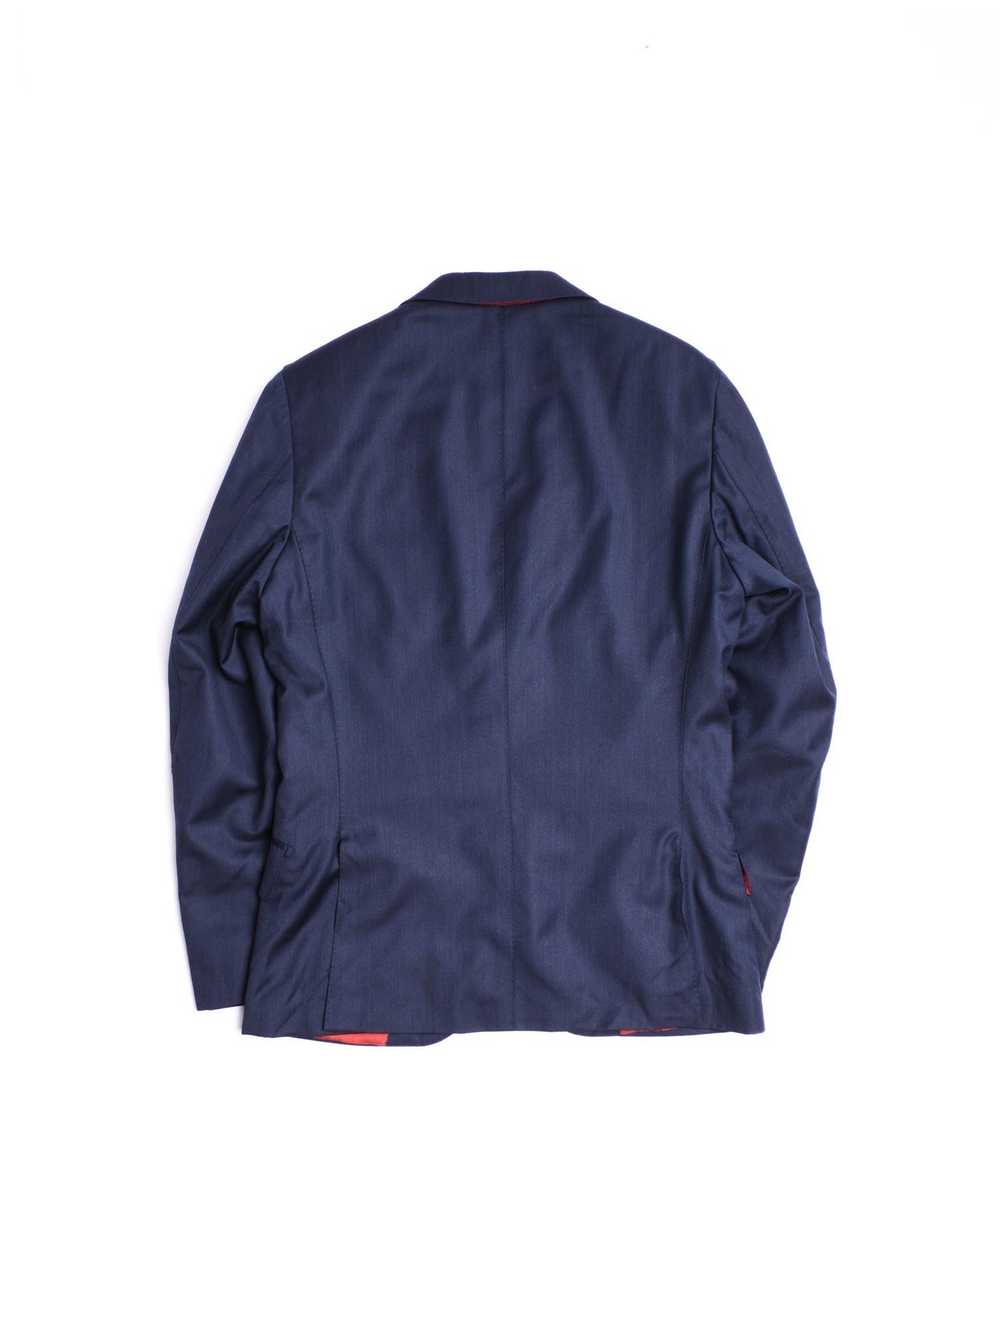 Suitsupply Suit Supply Classic Blazer Jacket - image 2